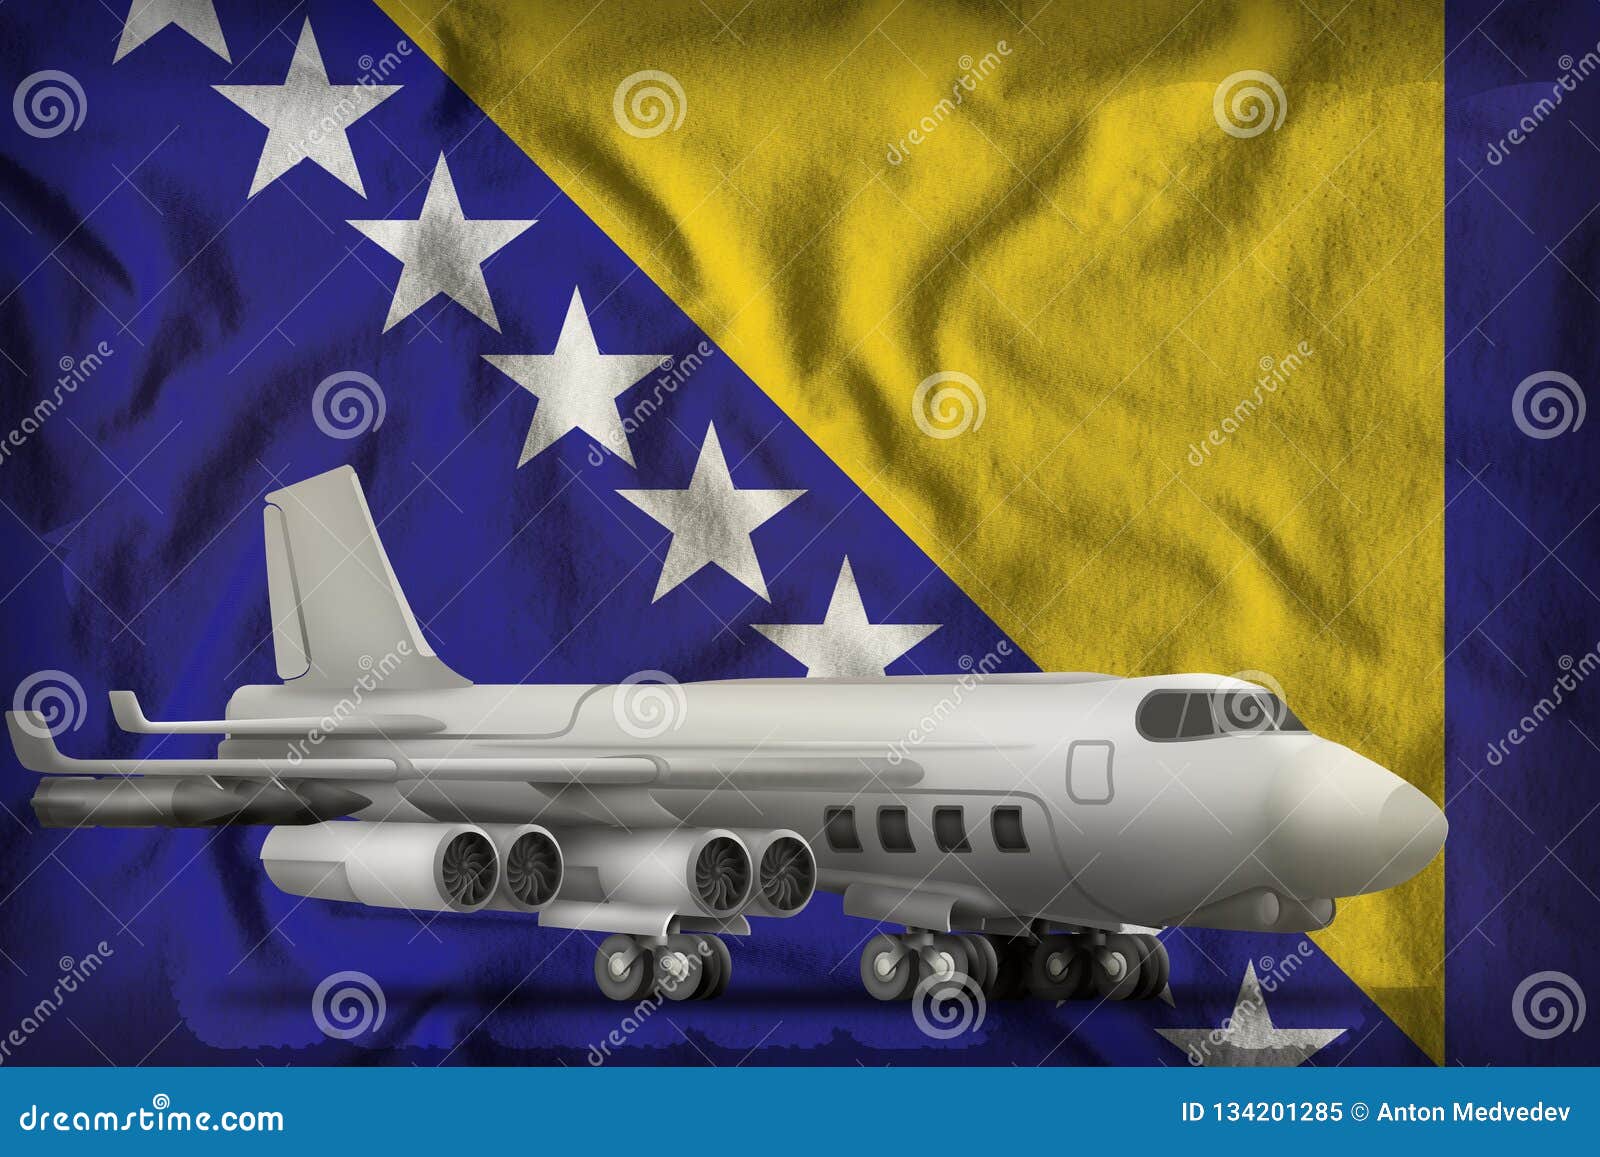 Download Bomber On The Bosnia And Herzegovina State Flag Background. 3d Illustration Stock Illustration ...